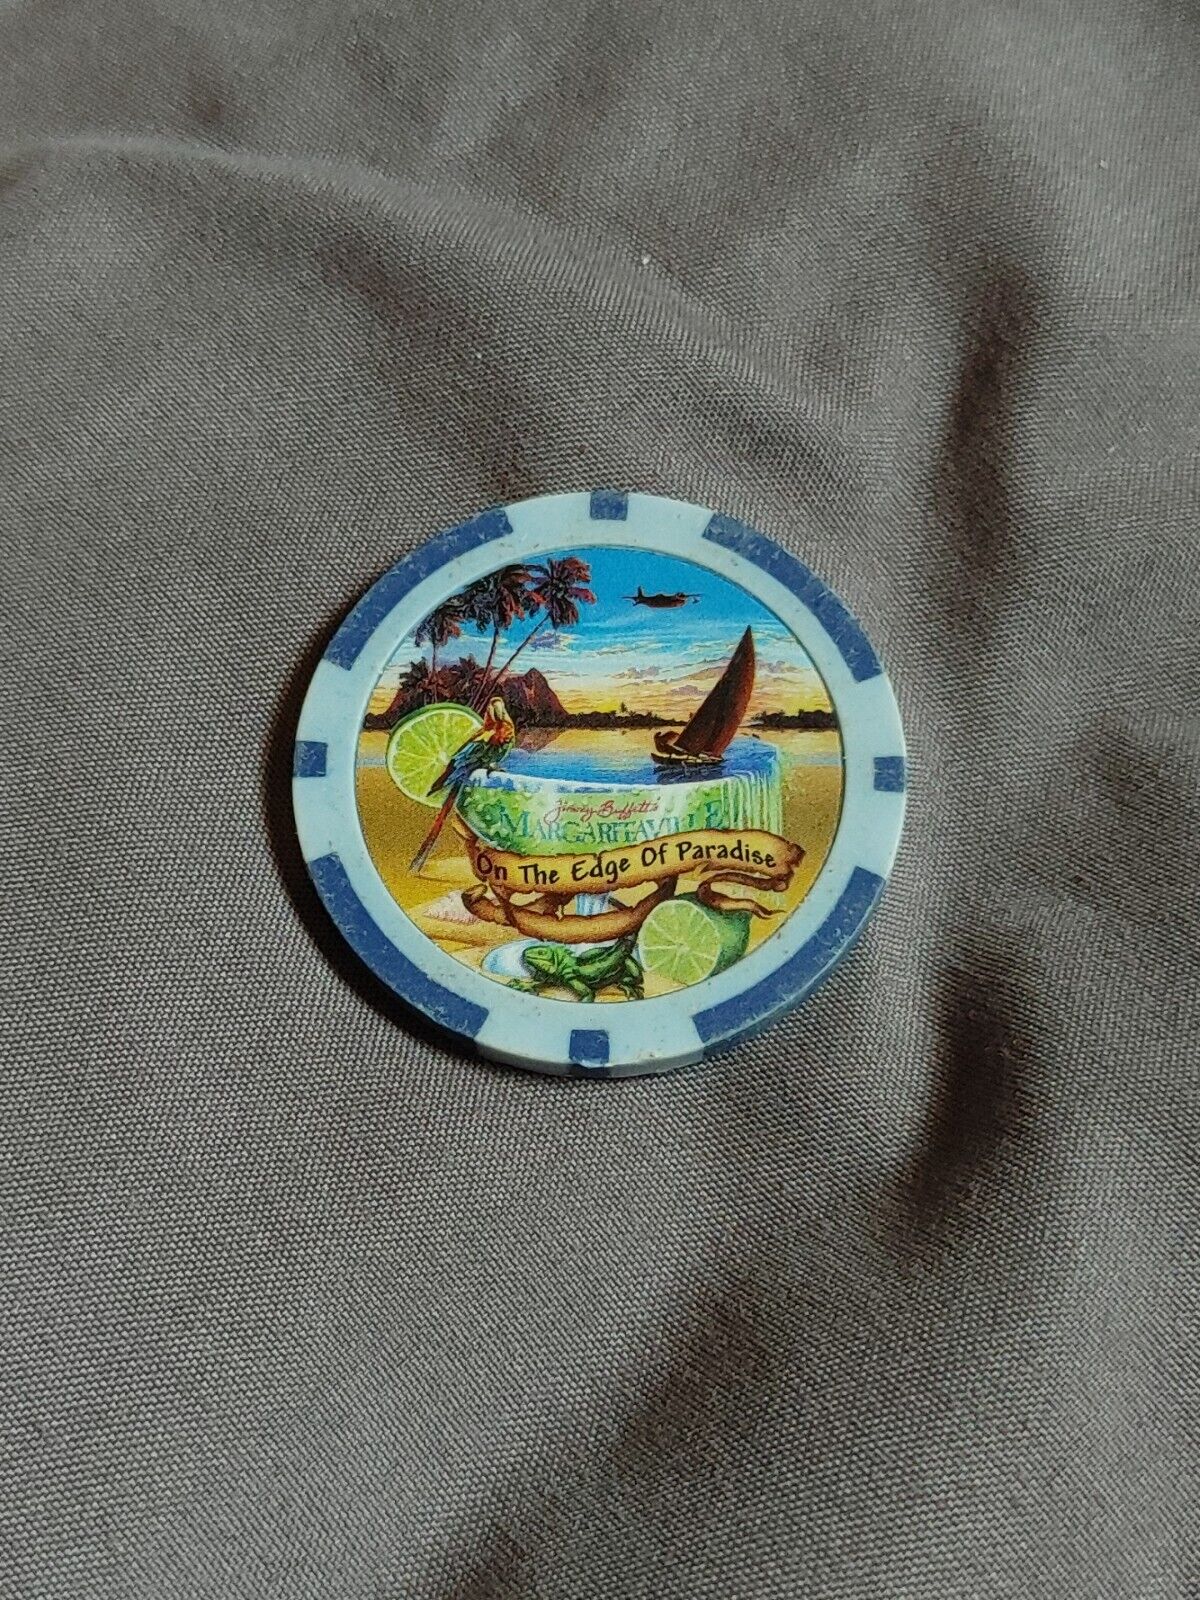 Jimmy Buffet's Margaritaville The Edge Of Paradise Poker Chip Souvenir